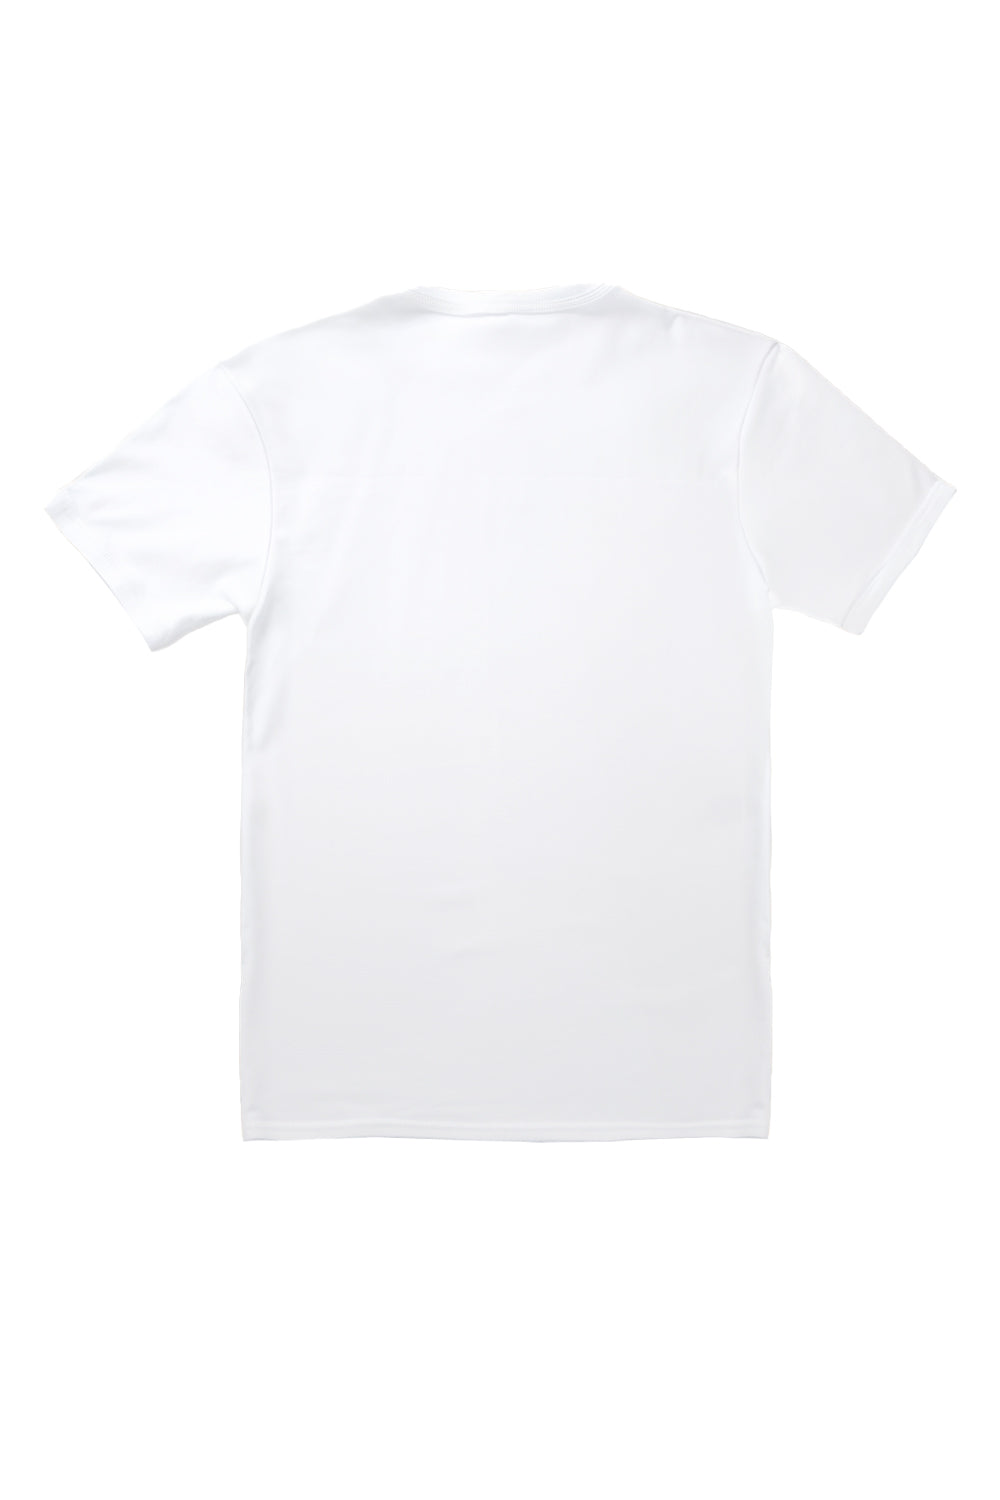 Cowboy Queen T-Shirt in White (Custom Packs)